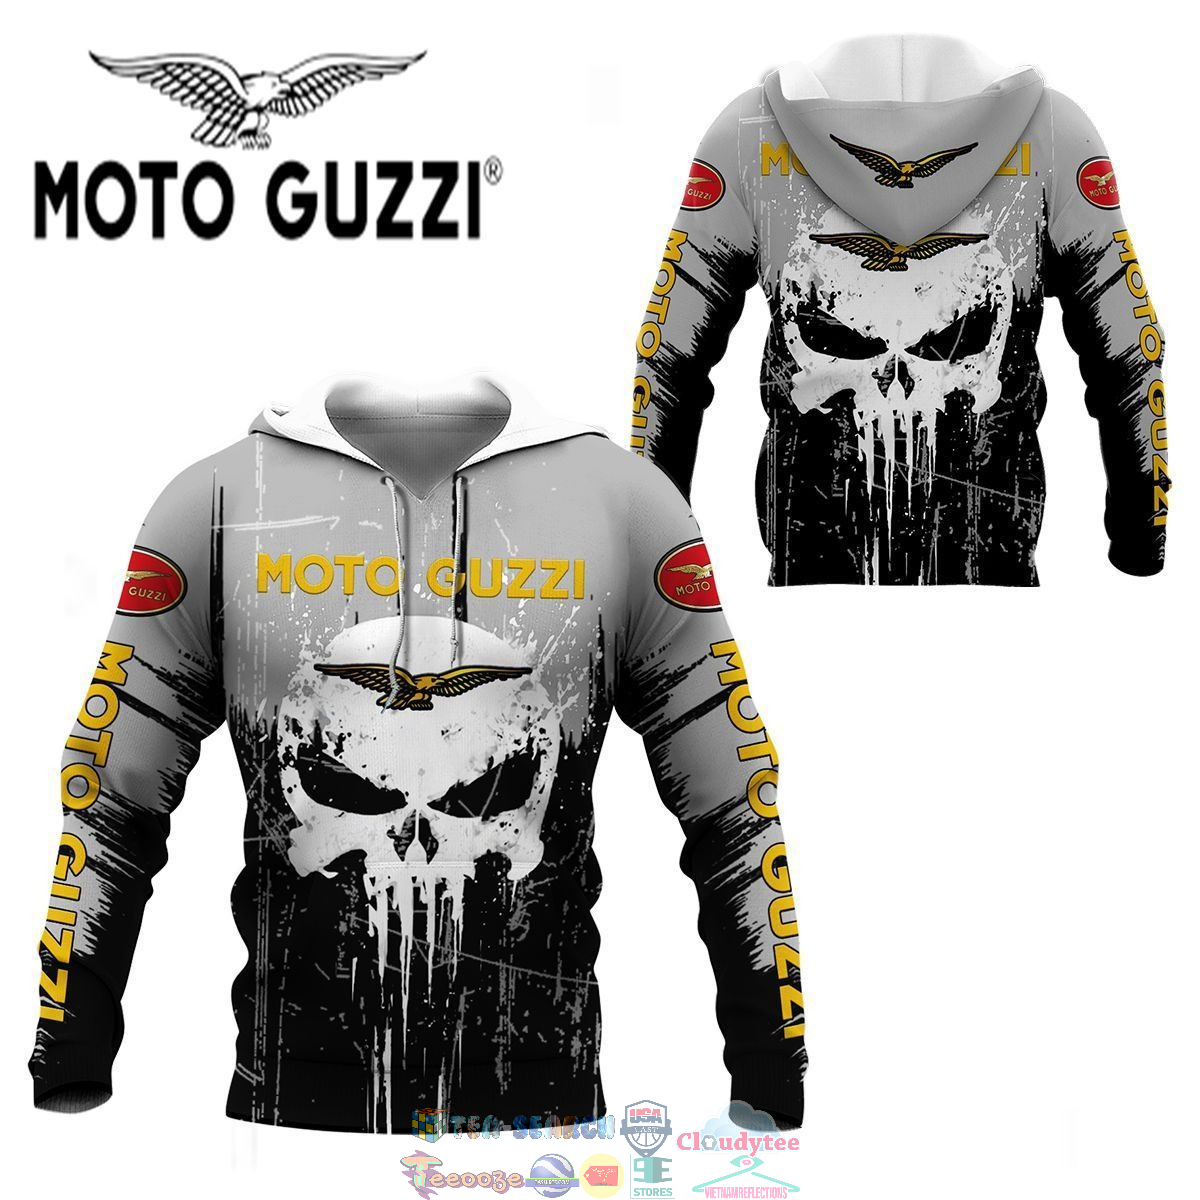 YOuwjZAE-TH060822-55xxxMoto-Guzzi-Skull-ver-3-3D-hoodie-and-t-shirt3.jpg